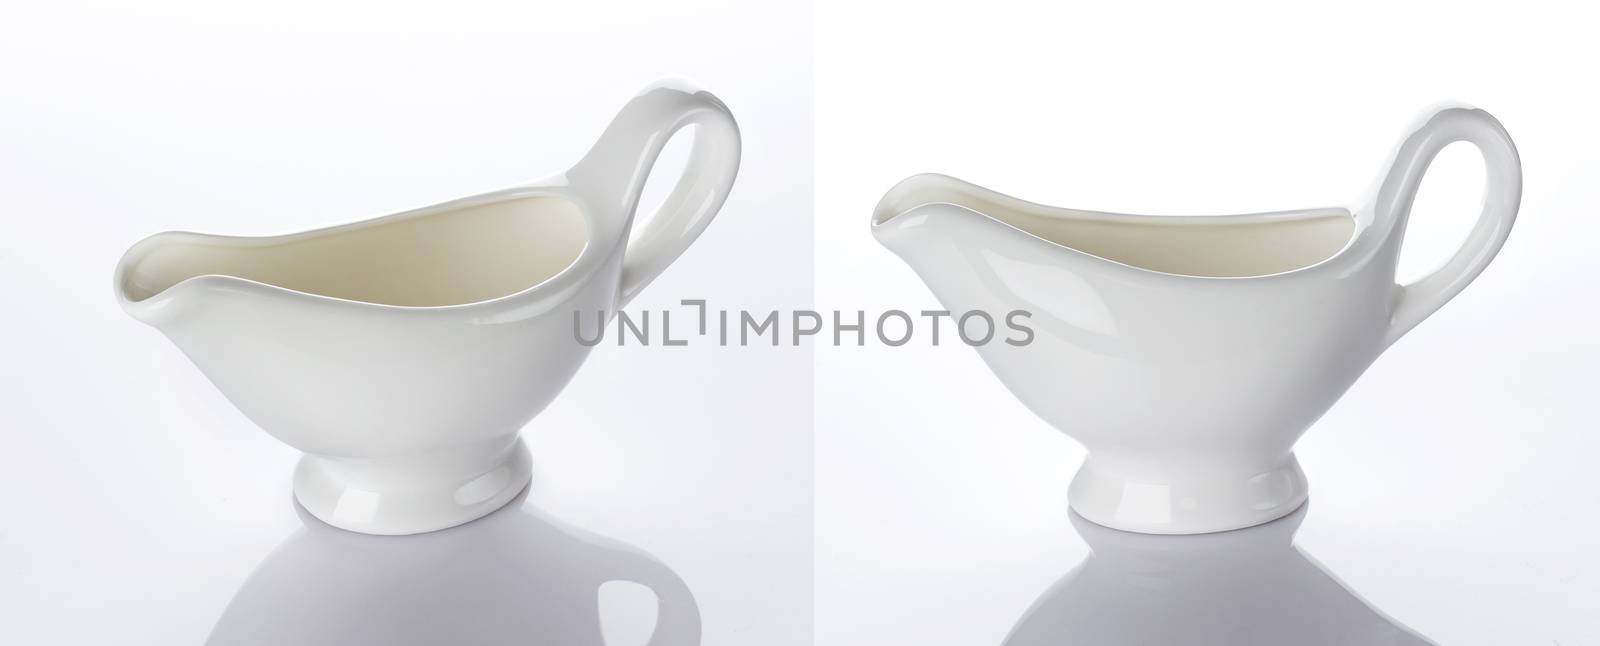 Empty ceramic creamer for cream or milk isolated on white background